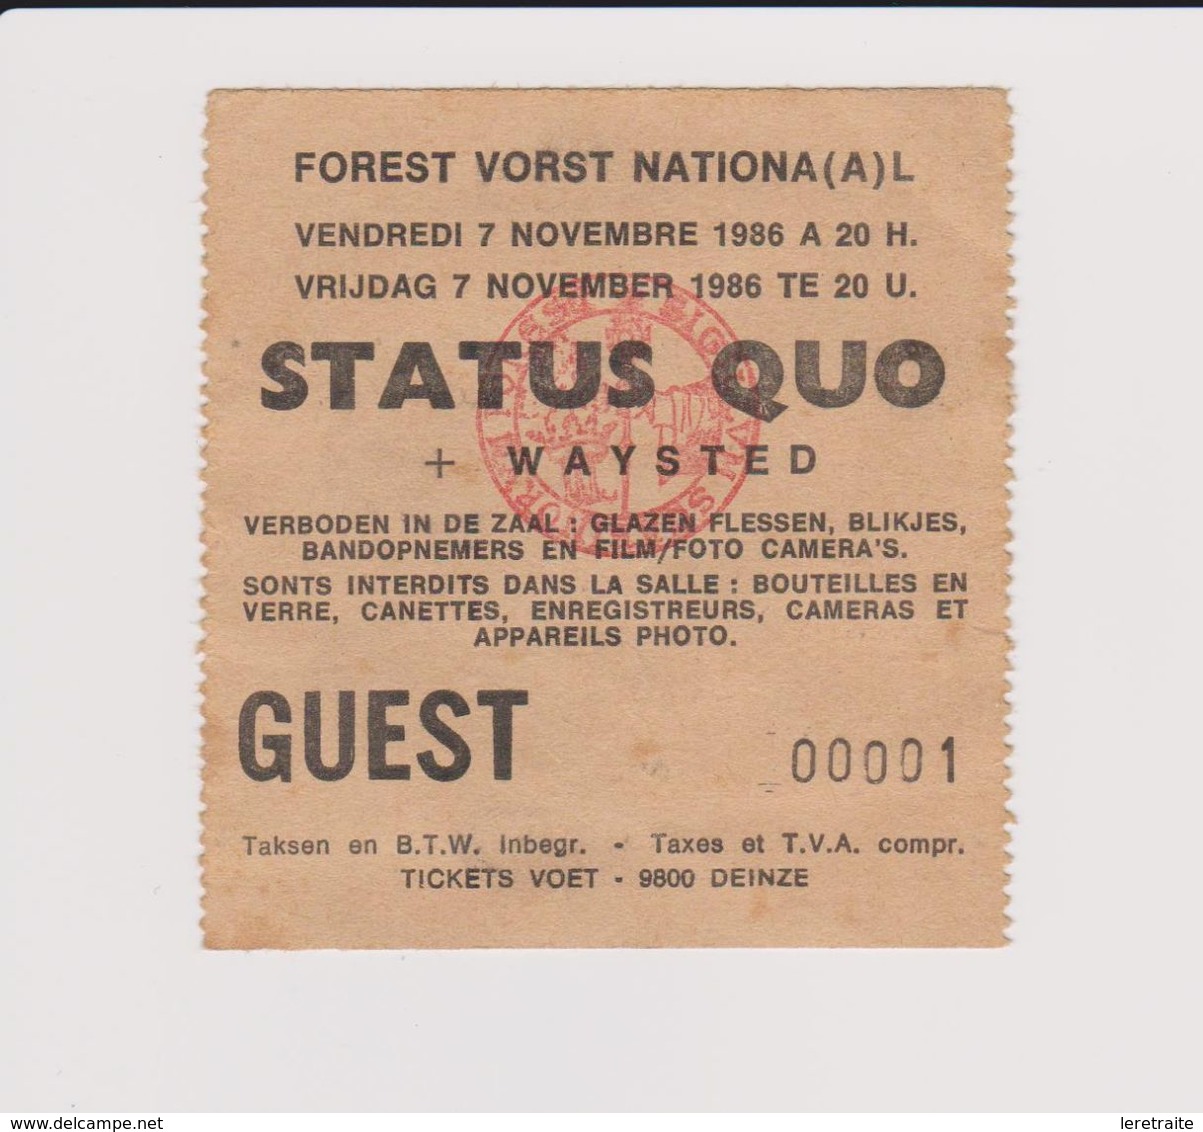 Concert STATUS QUO + WAYSTED 7 NOVEMBRE 1986  à Forest B TICKET N° 00001 - Tickets De Concerts